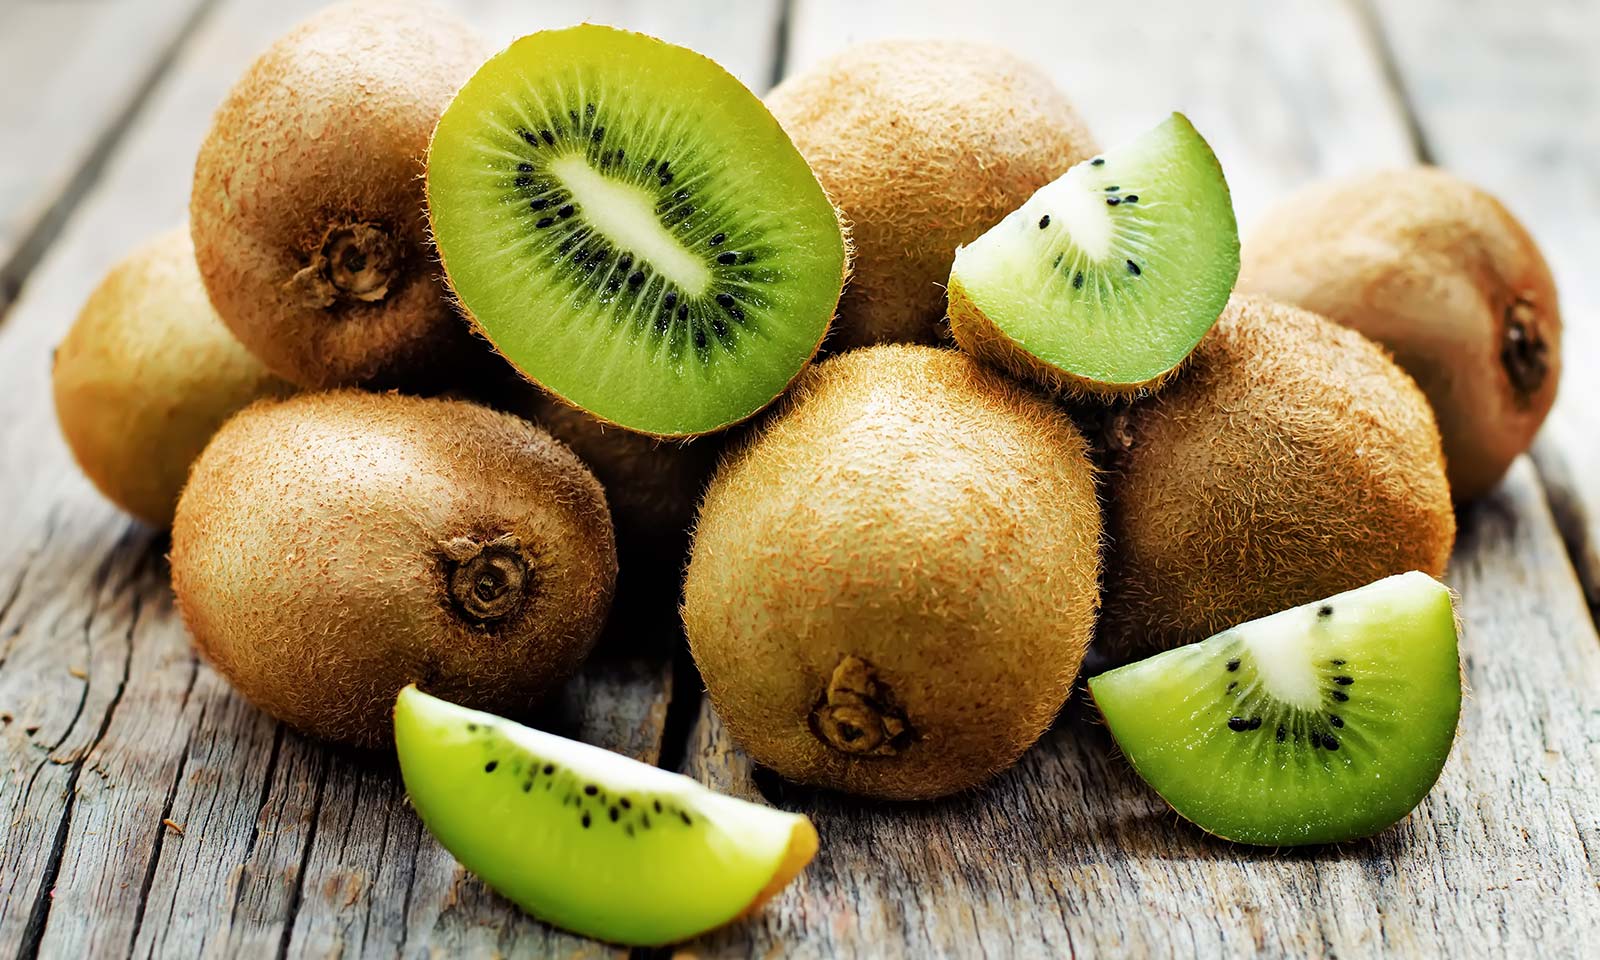 In kiwi spanish fruit Fruits in